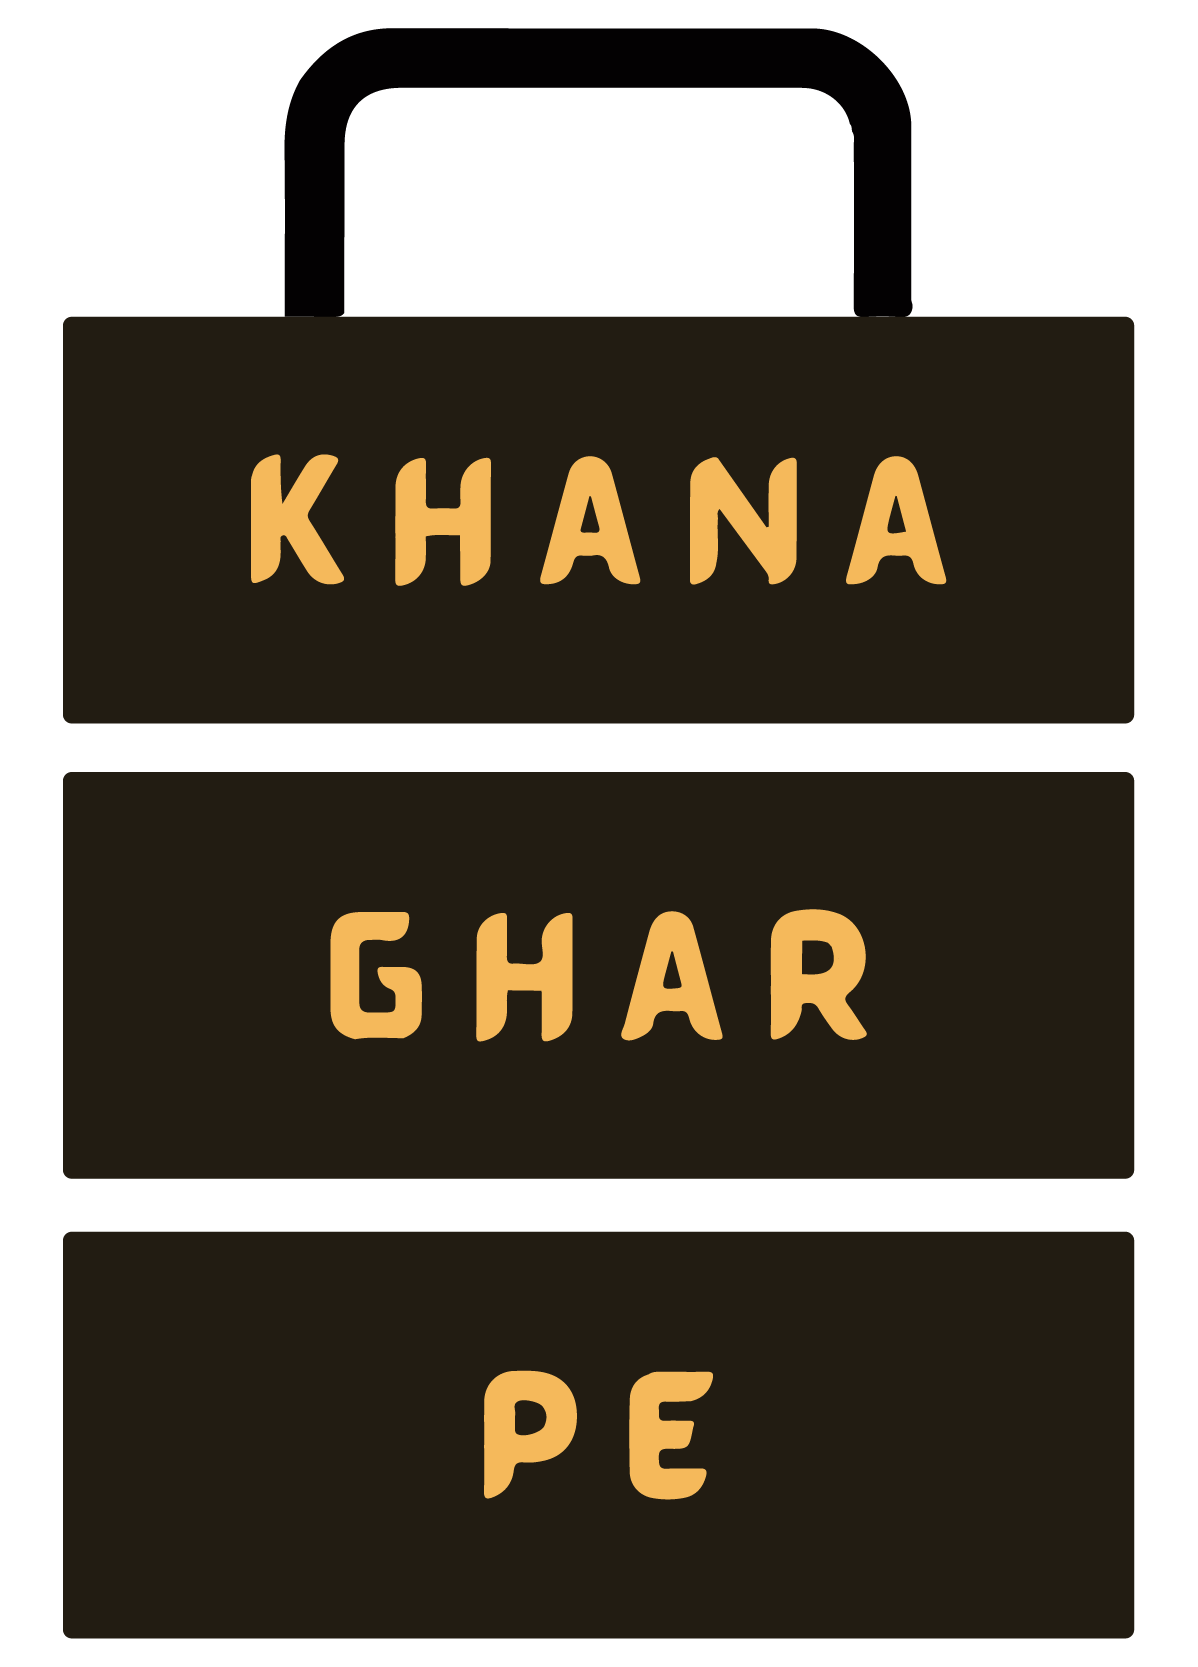 About Khana Ghar Pe – Khanagharpe